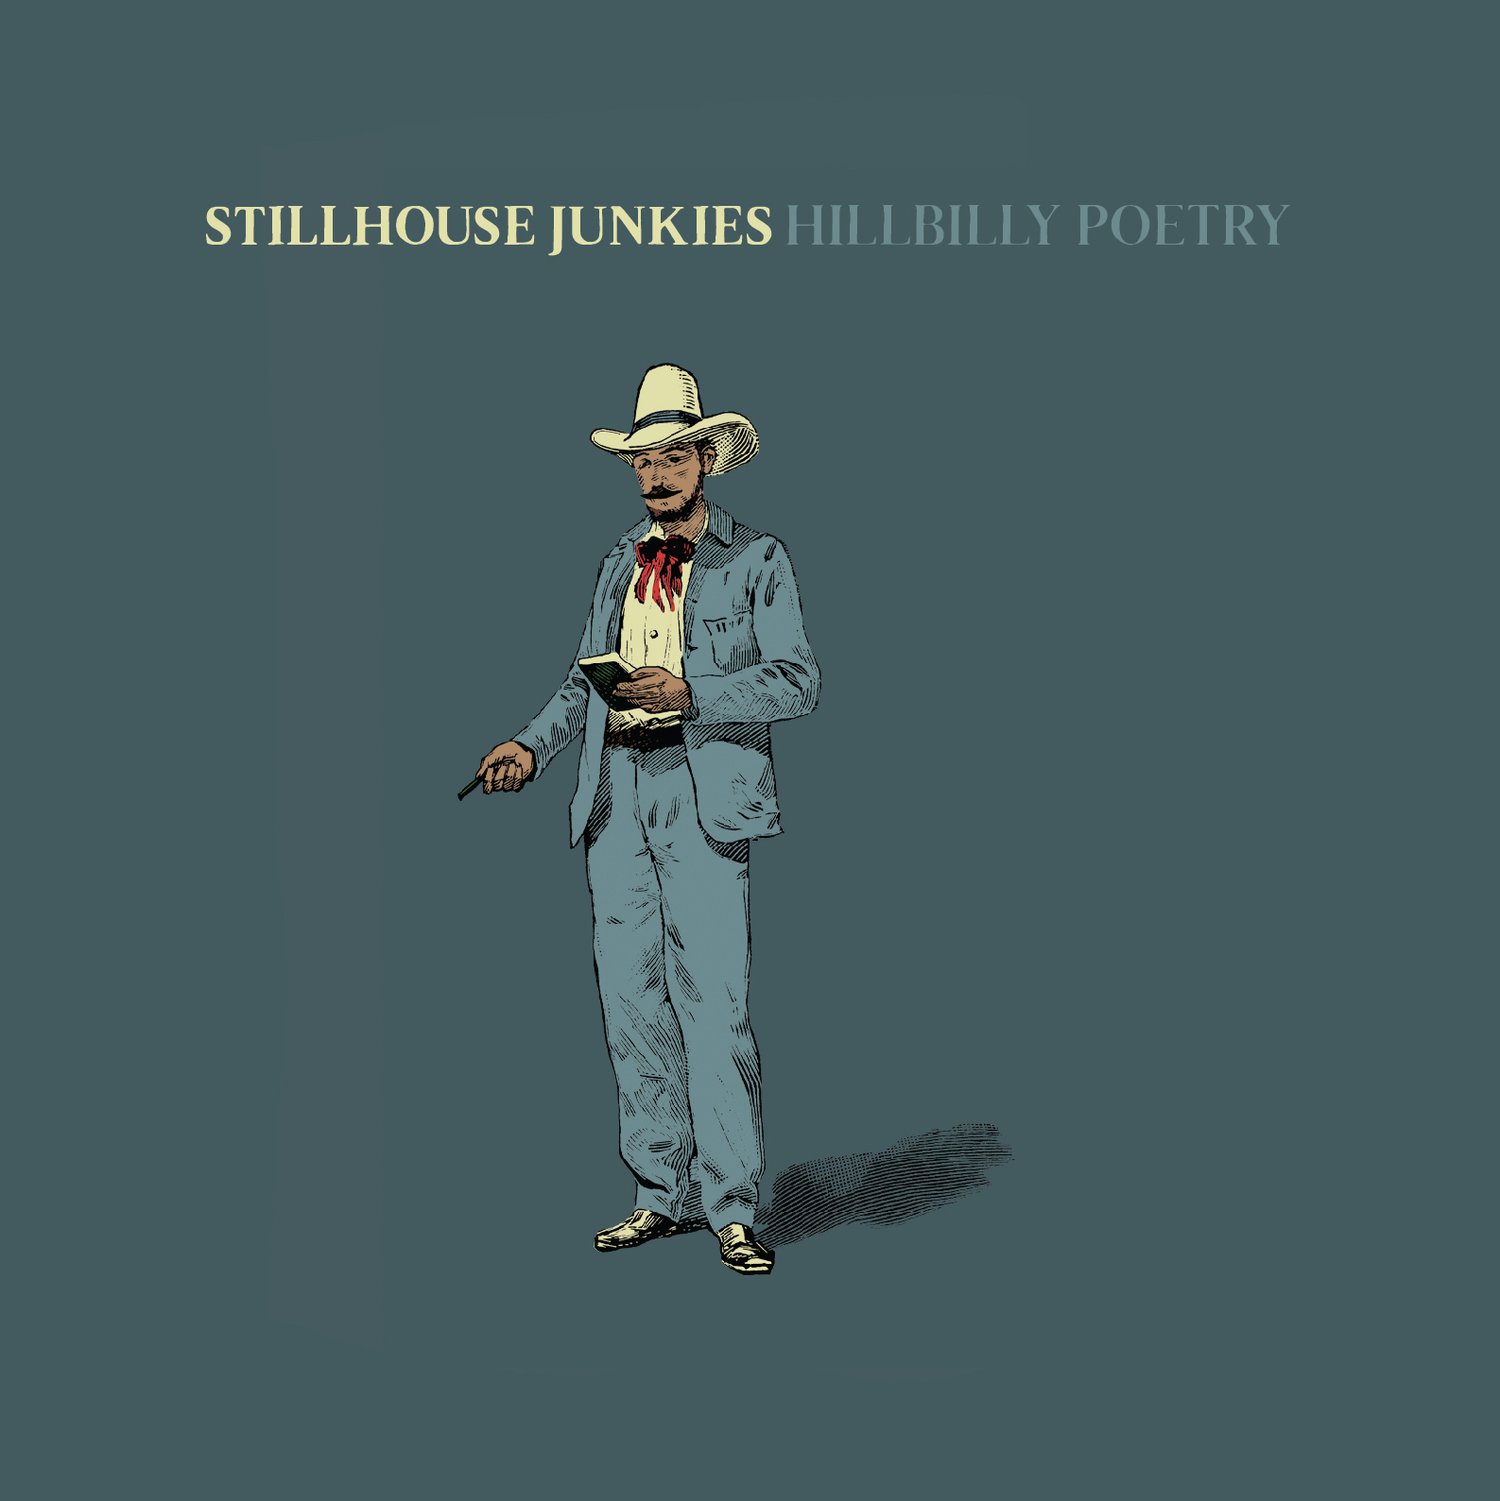 "Hillbilly Poetry" by Stillhouse Junkies